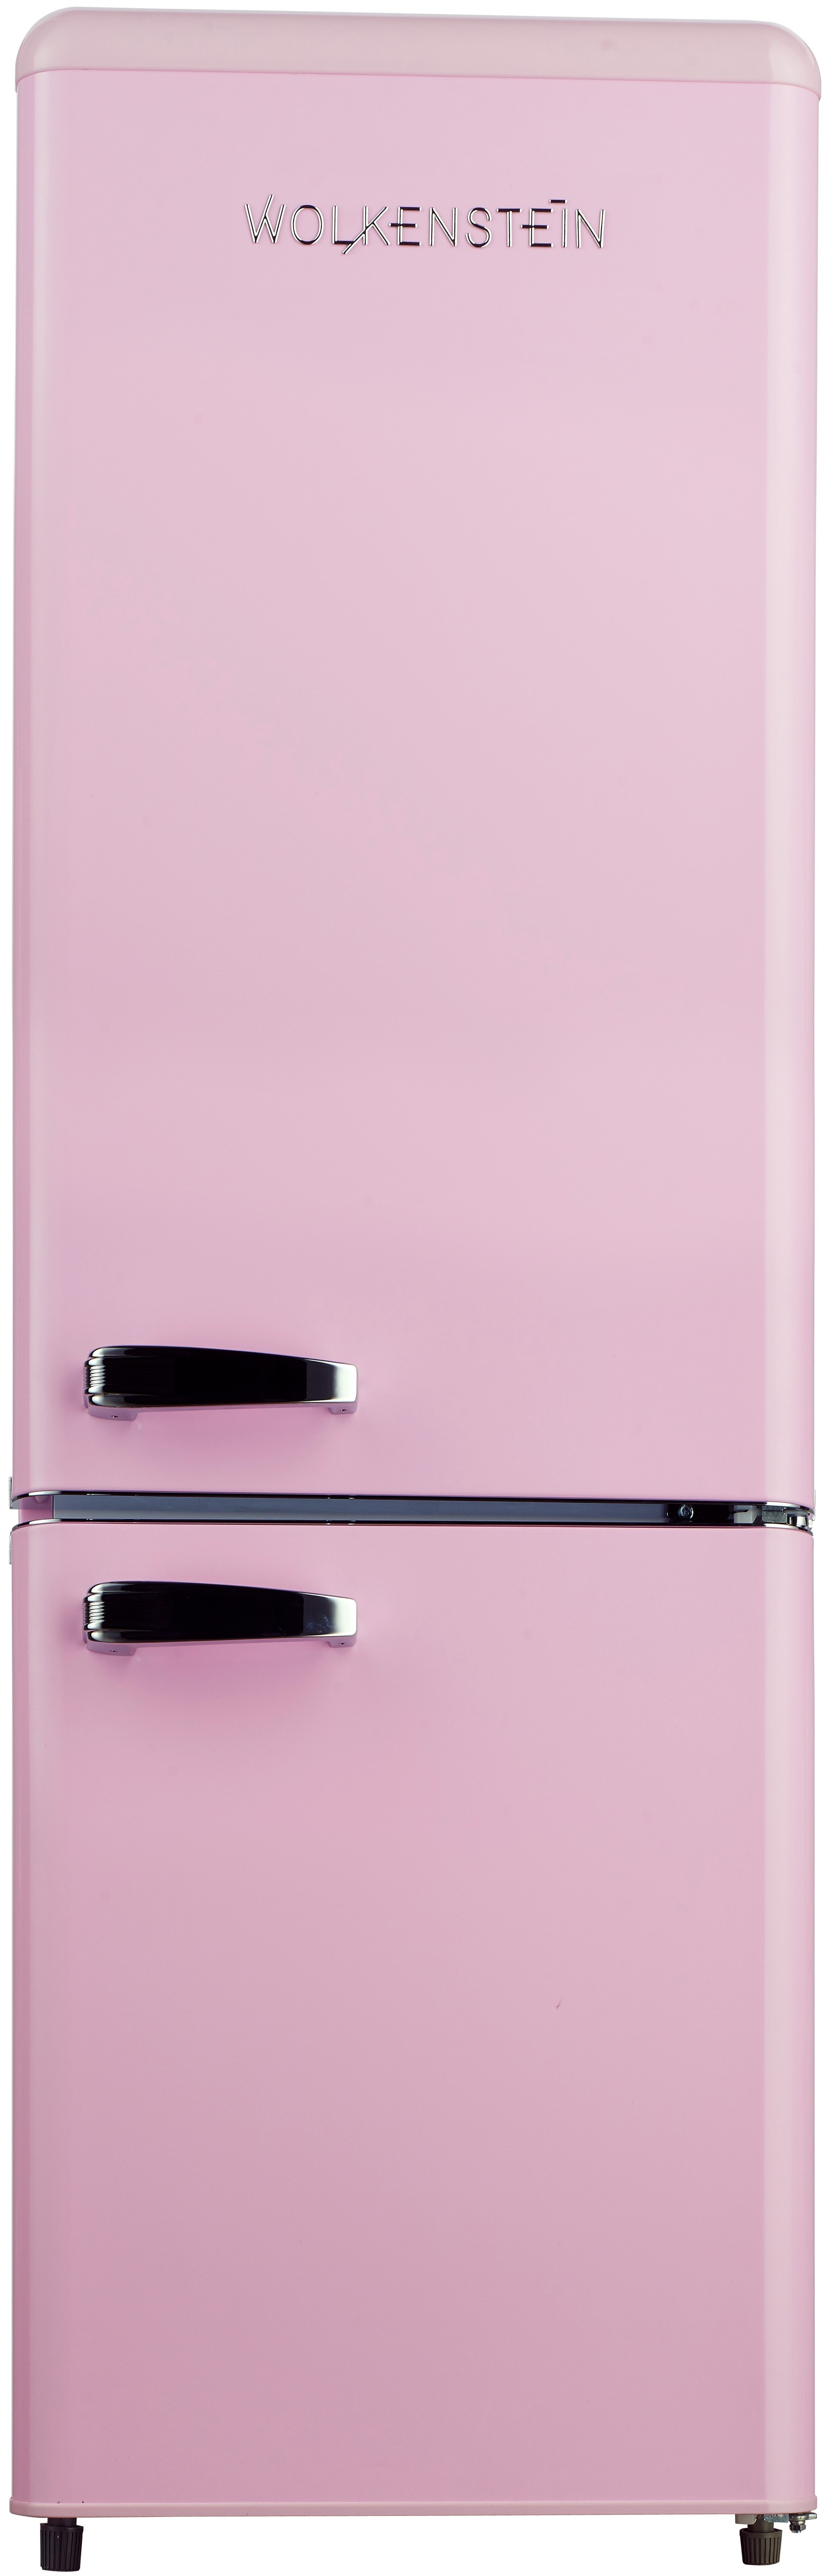 Wolkenstein KG250.4RT SP roze retro koel-vriescombinatie